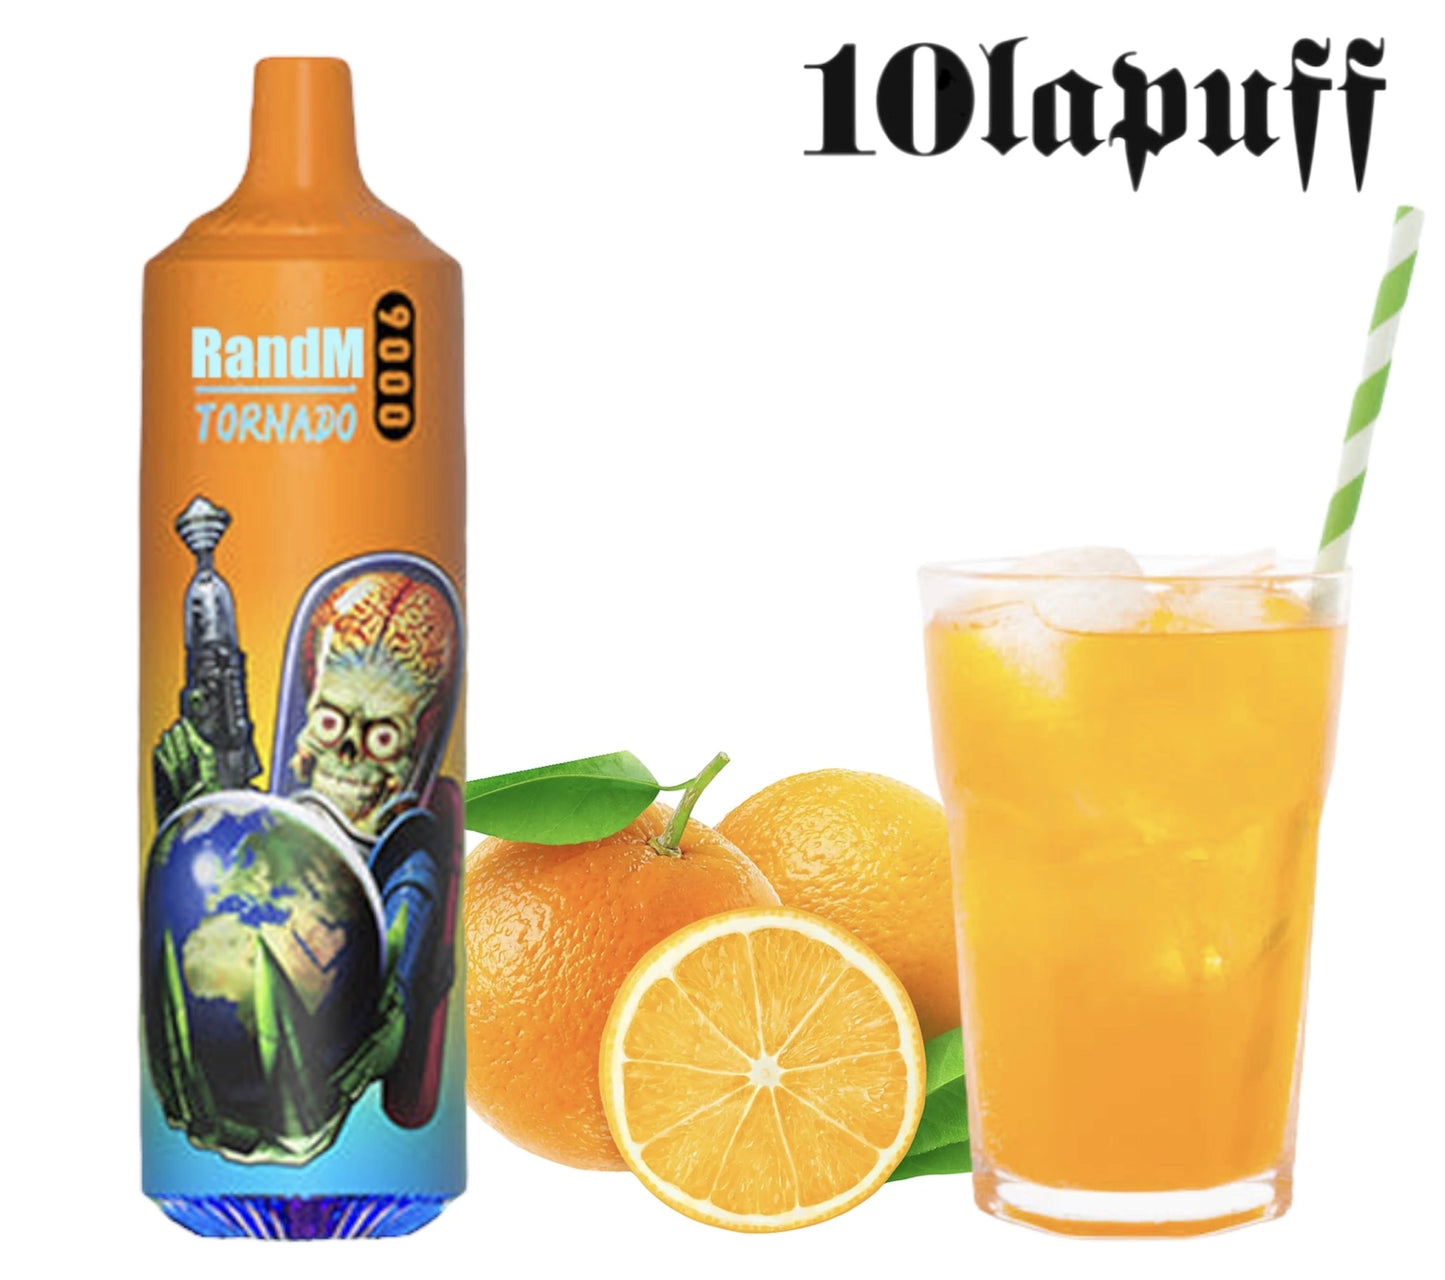 PUFF 9000 TORNADO RandM – Soda Orange